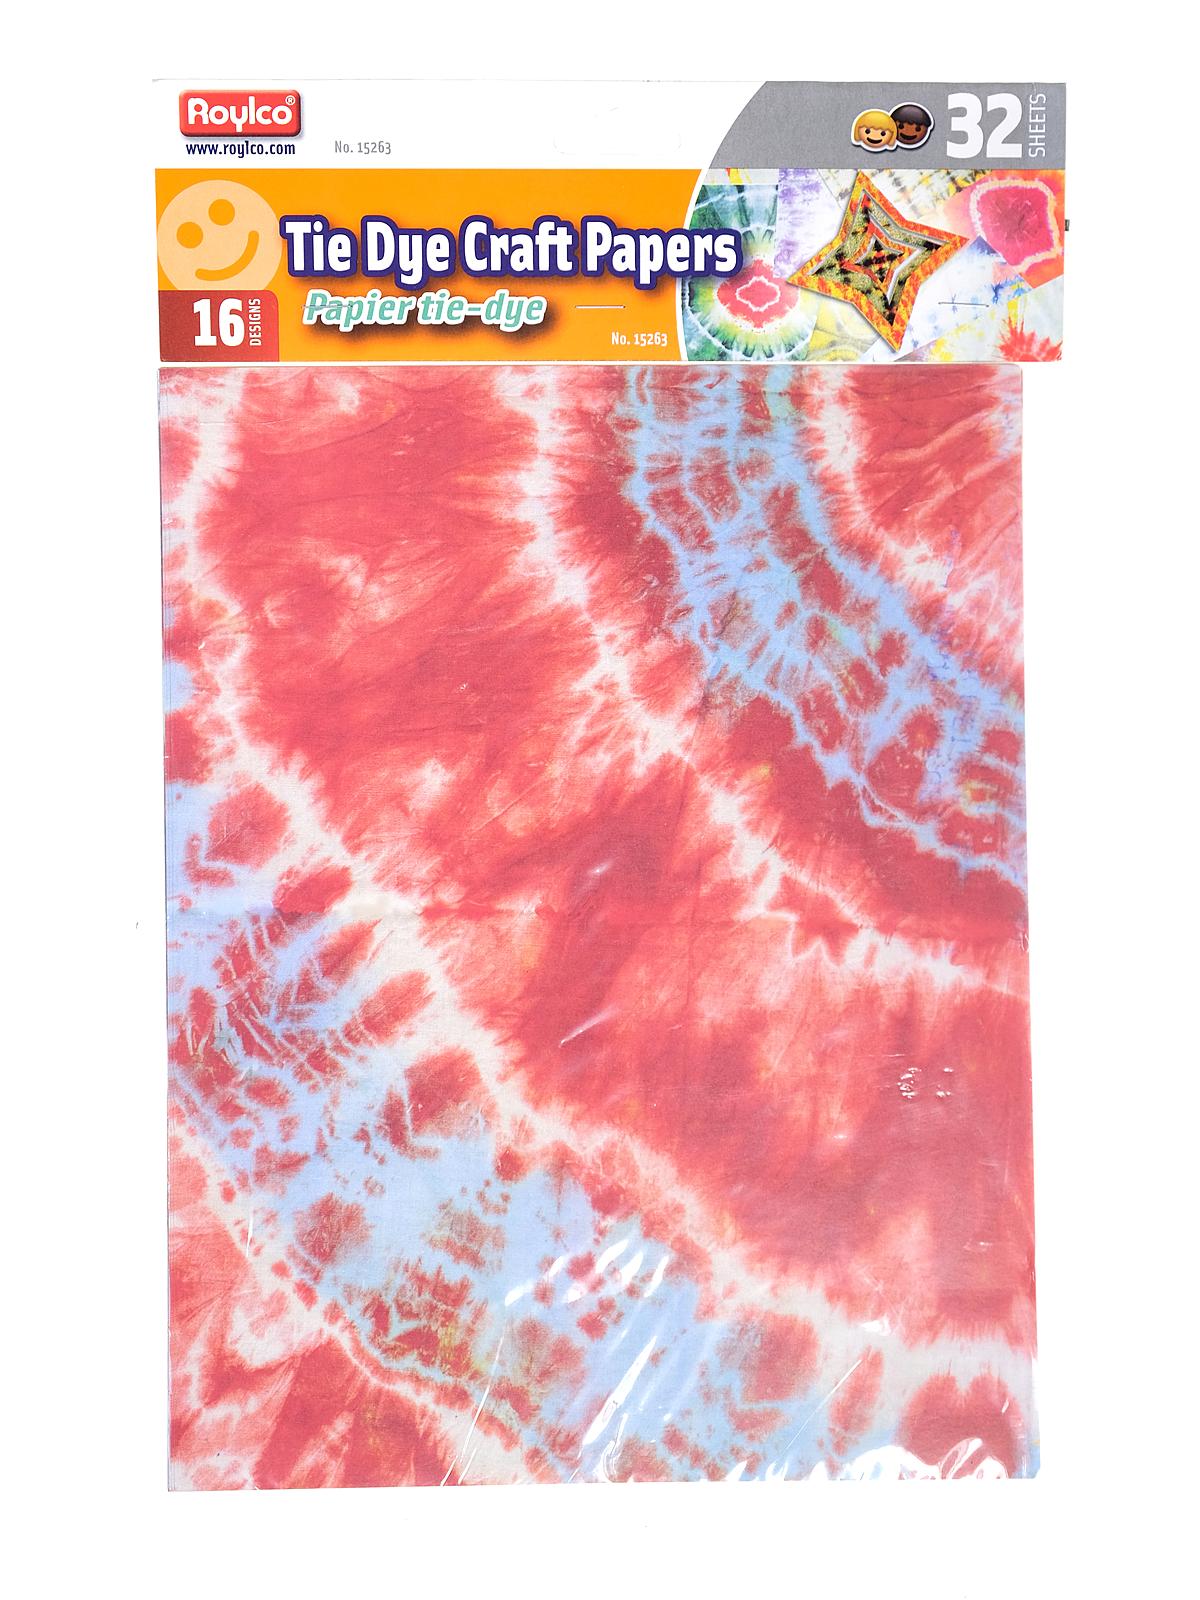 Tie Dye Craft Paper 8 1 2 In. X 11 In. Pack Of 32